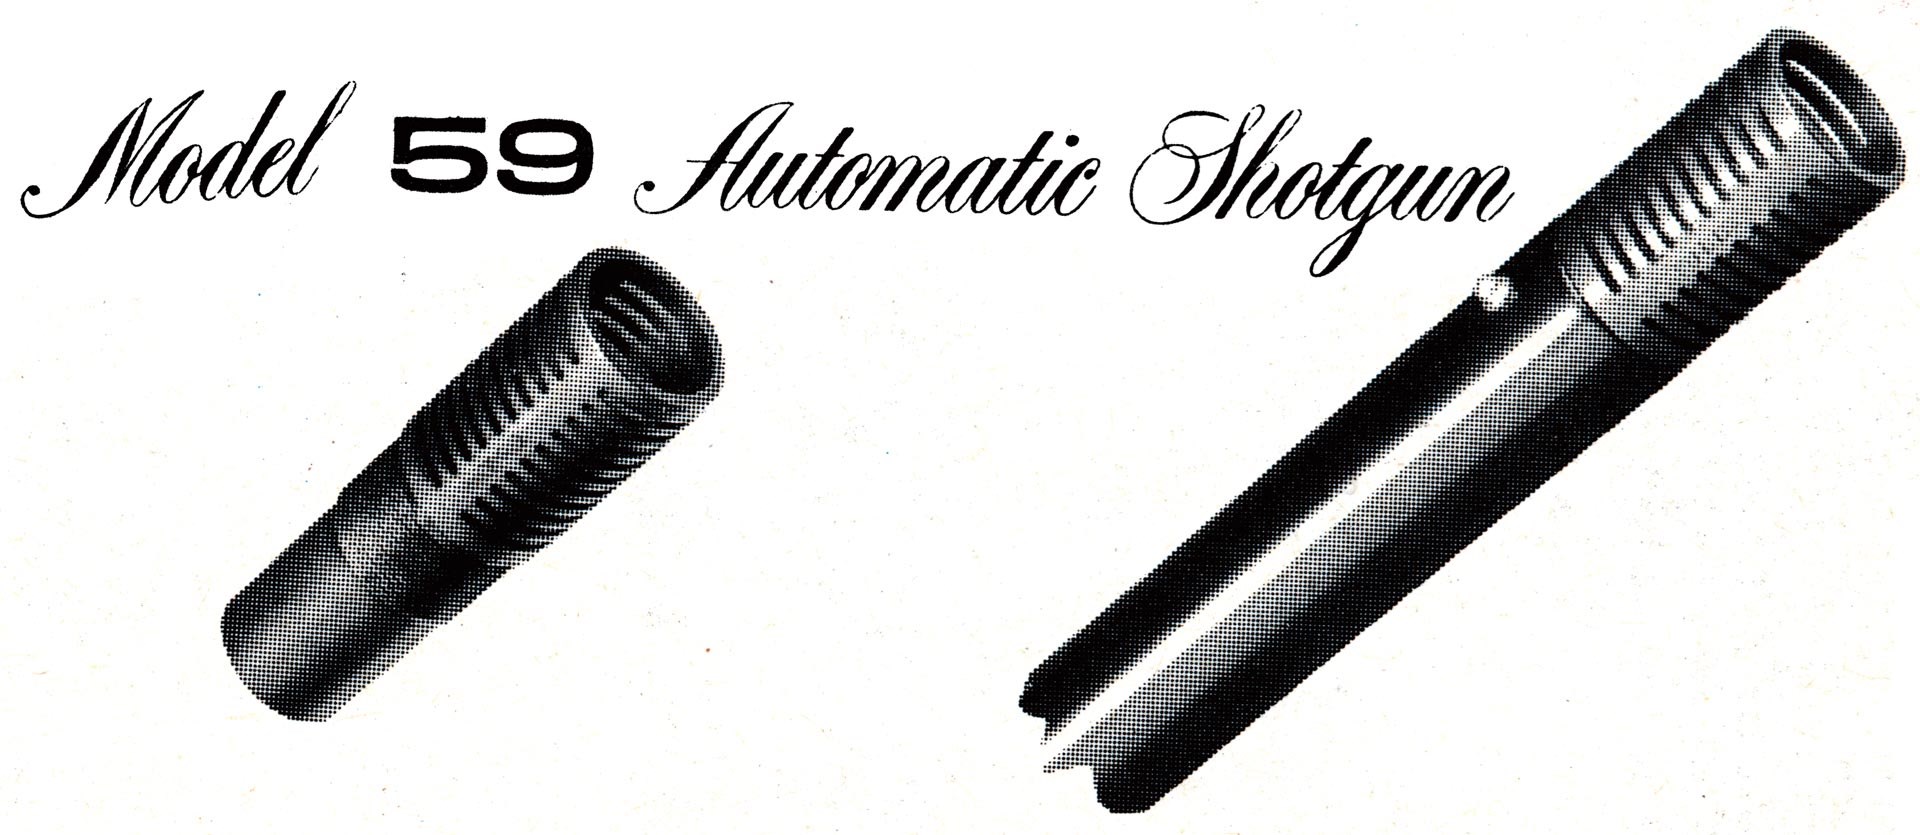 Model 59 Automatic shotgun barrel choke muzzle vintage advertisement